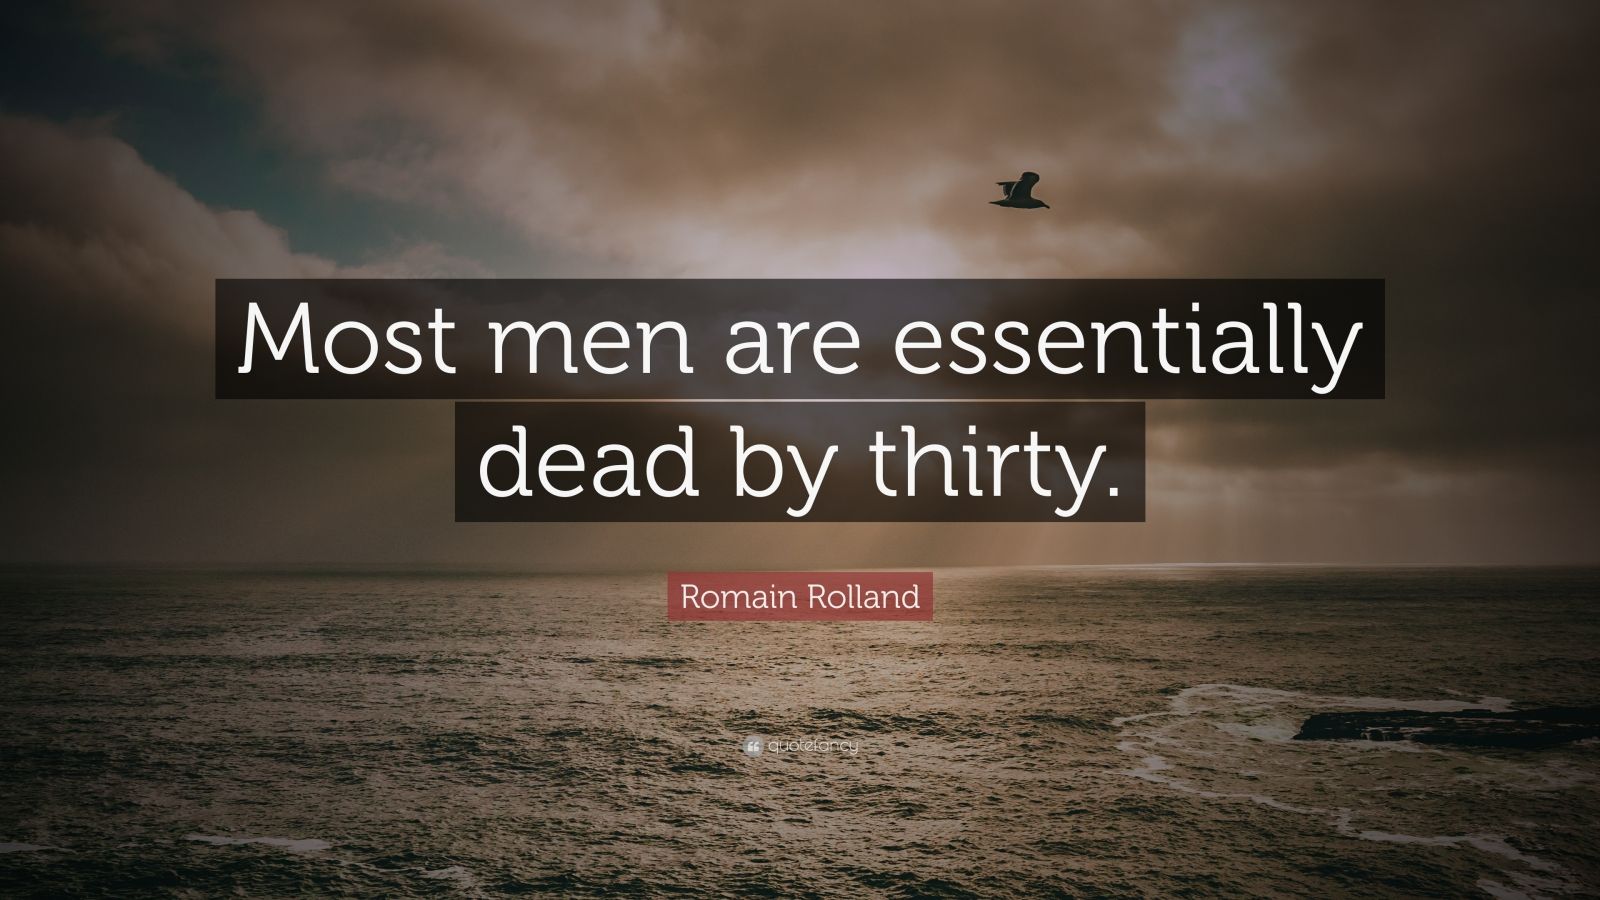 romain rolland quote